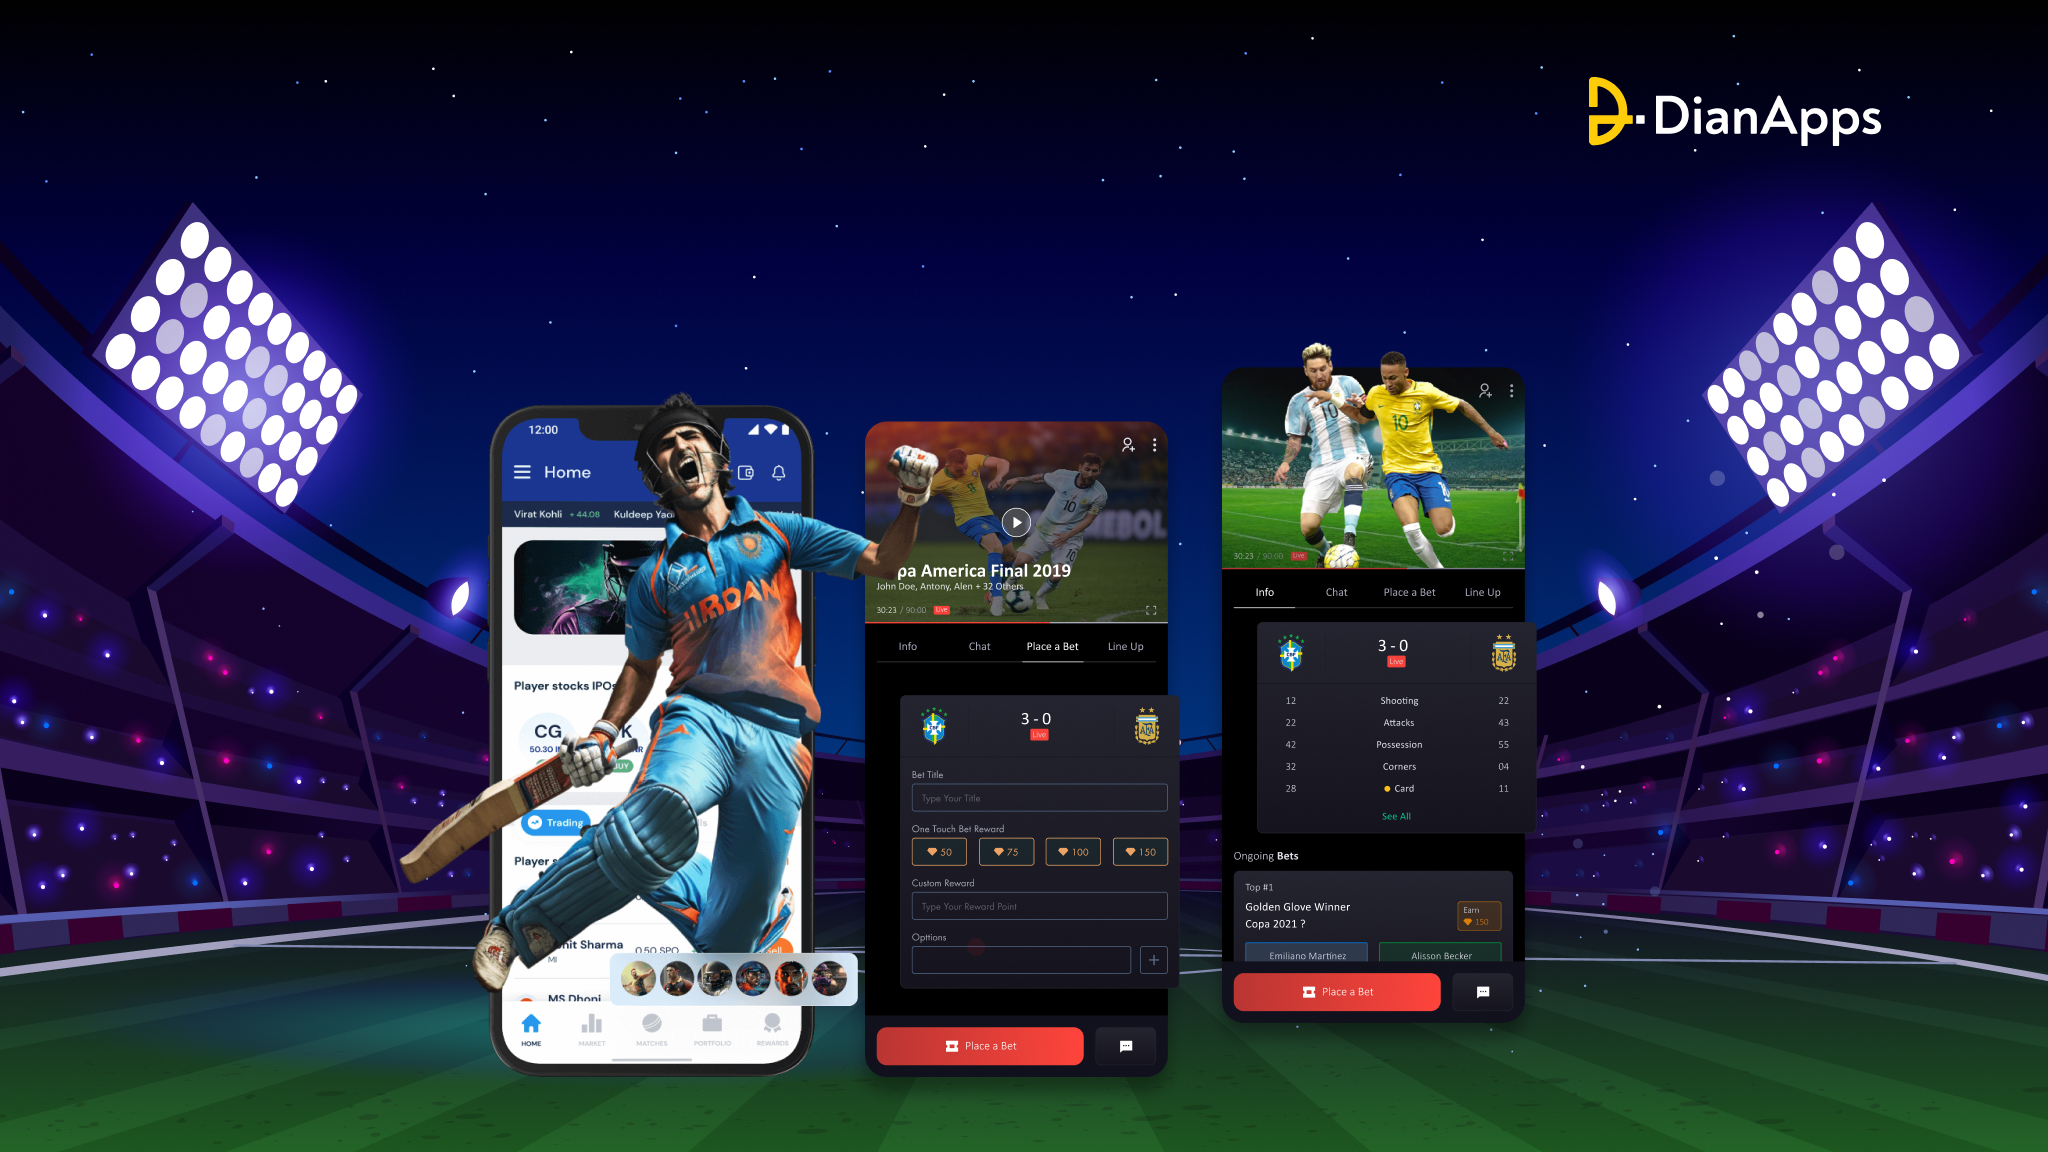 How to Develop a Fantasy Sports App like Dream11?